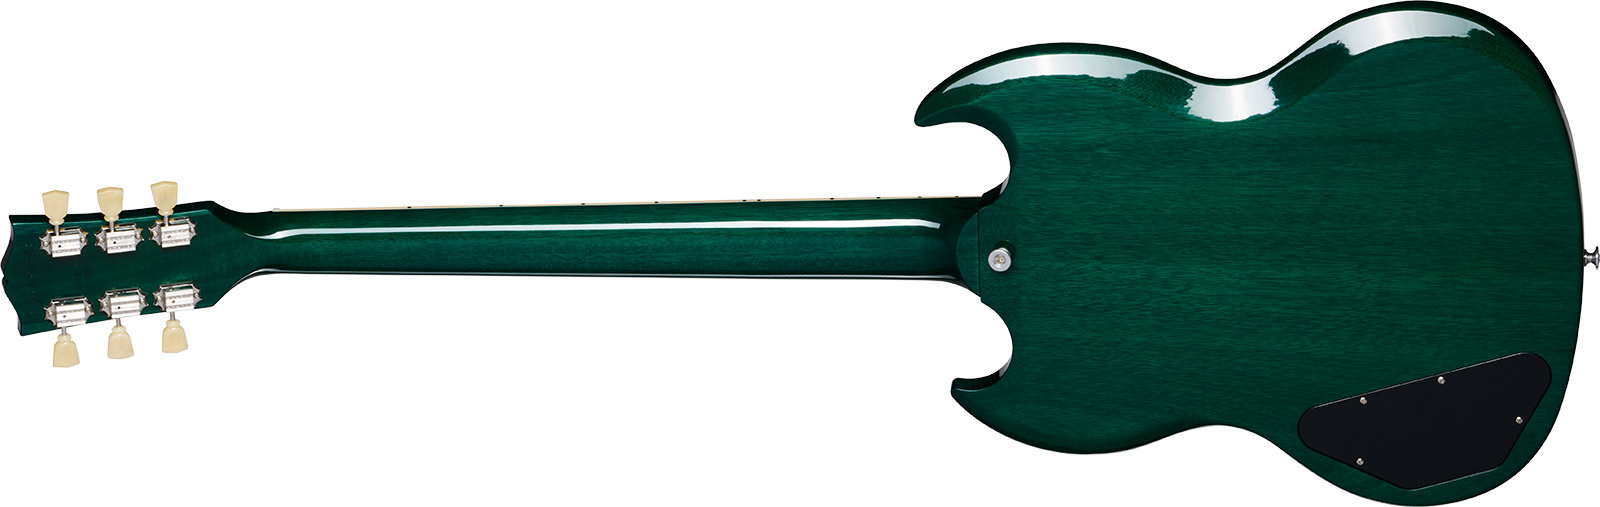 Gibson Sg Standard 1961 Custom Color 2h Ht Rw - Translucent Teal - Double Cut E-Gitarre - Variation 1